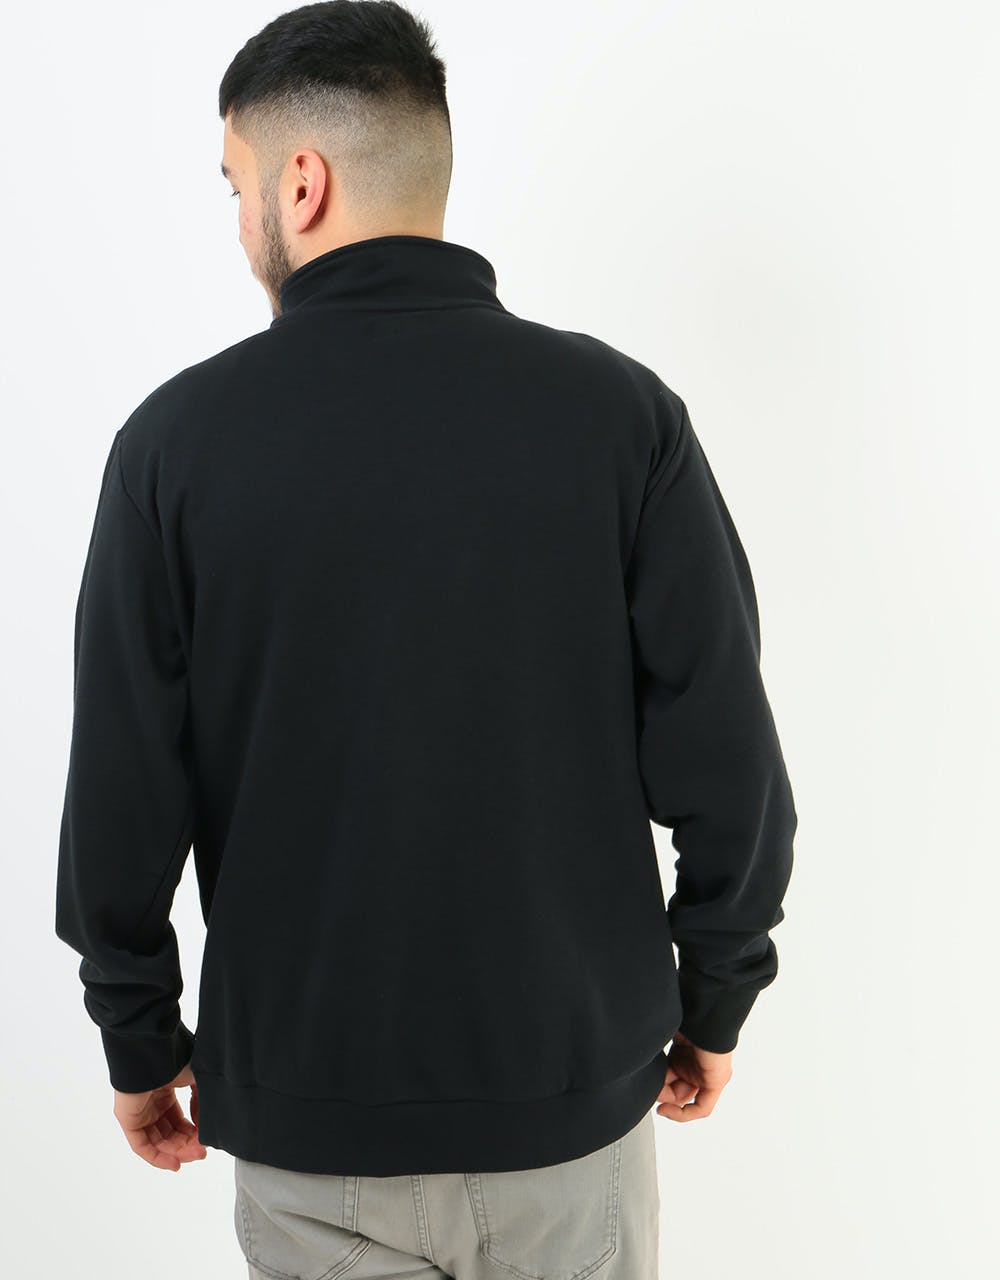 Converse Star Chevron Embroidered French Terry 1/2 Zip Sweatshirt - Black